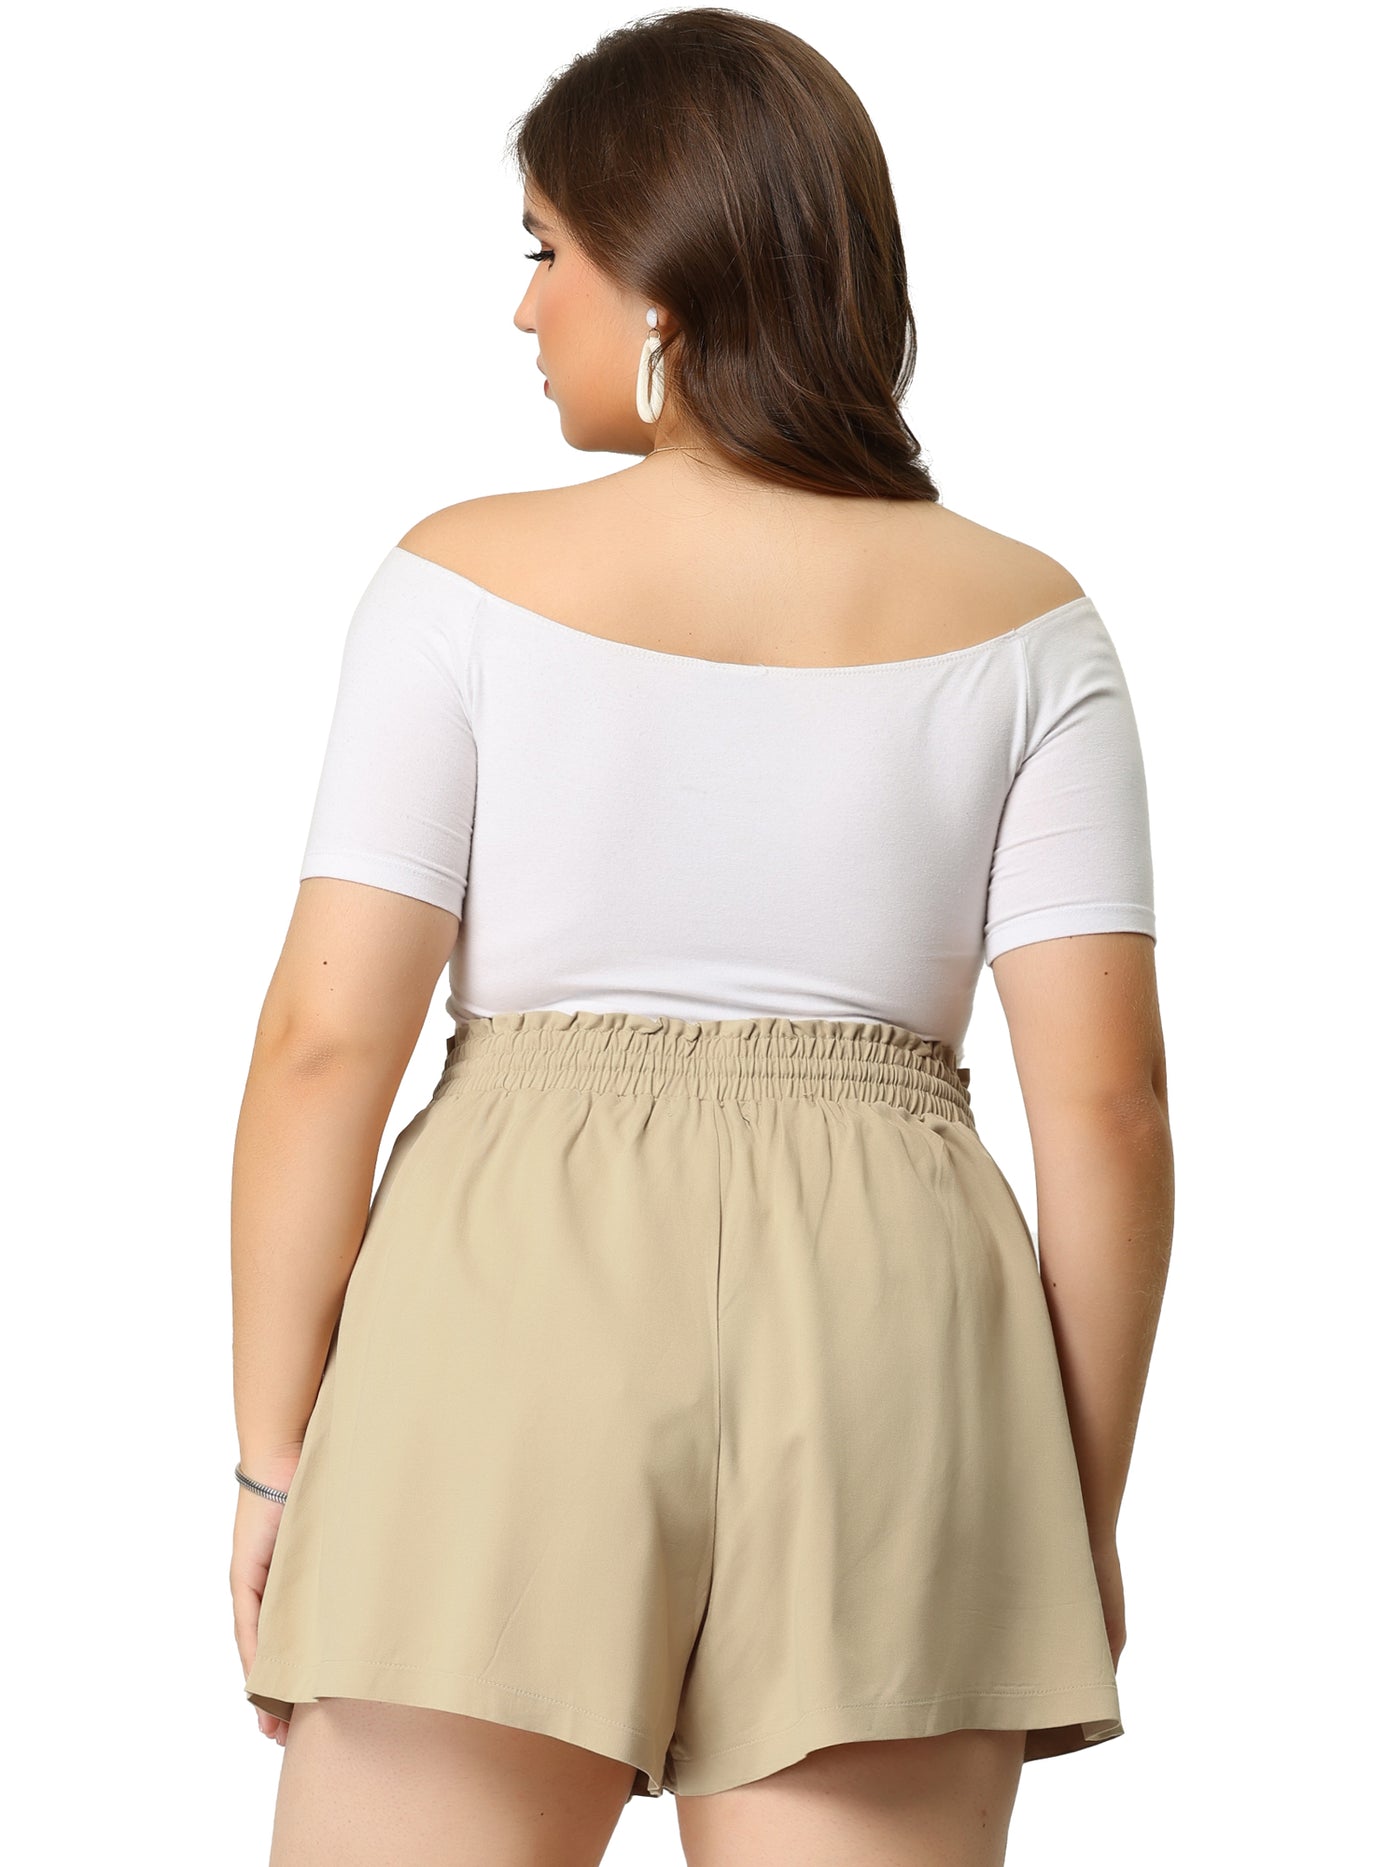 Bublédon Women's Plus Size Pants Casual Drawstring Waist Shorts with Front Pokcets